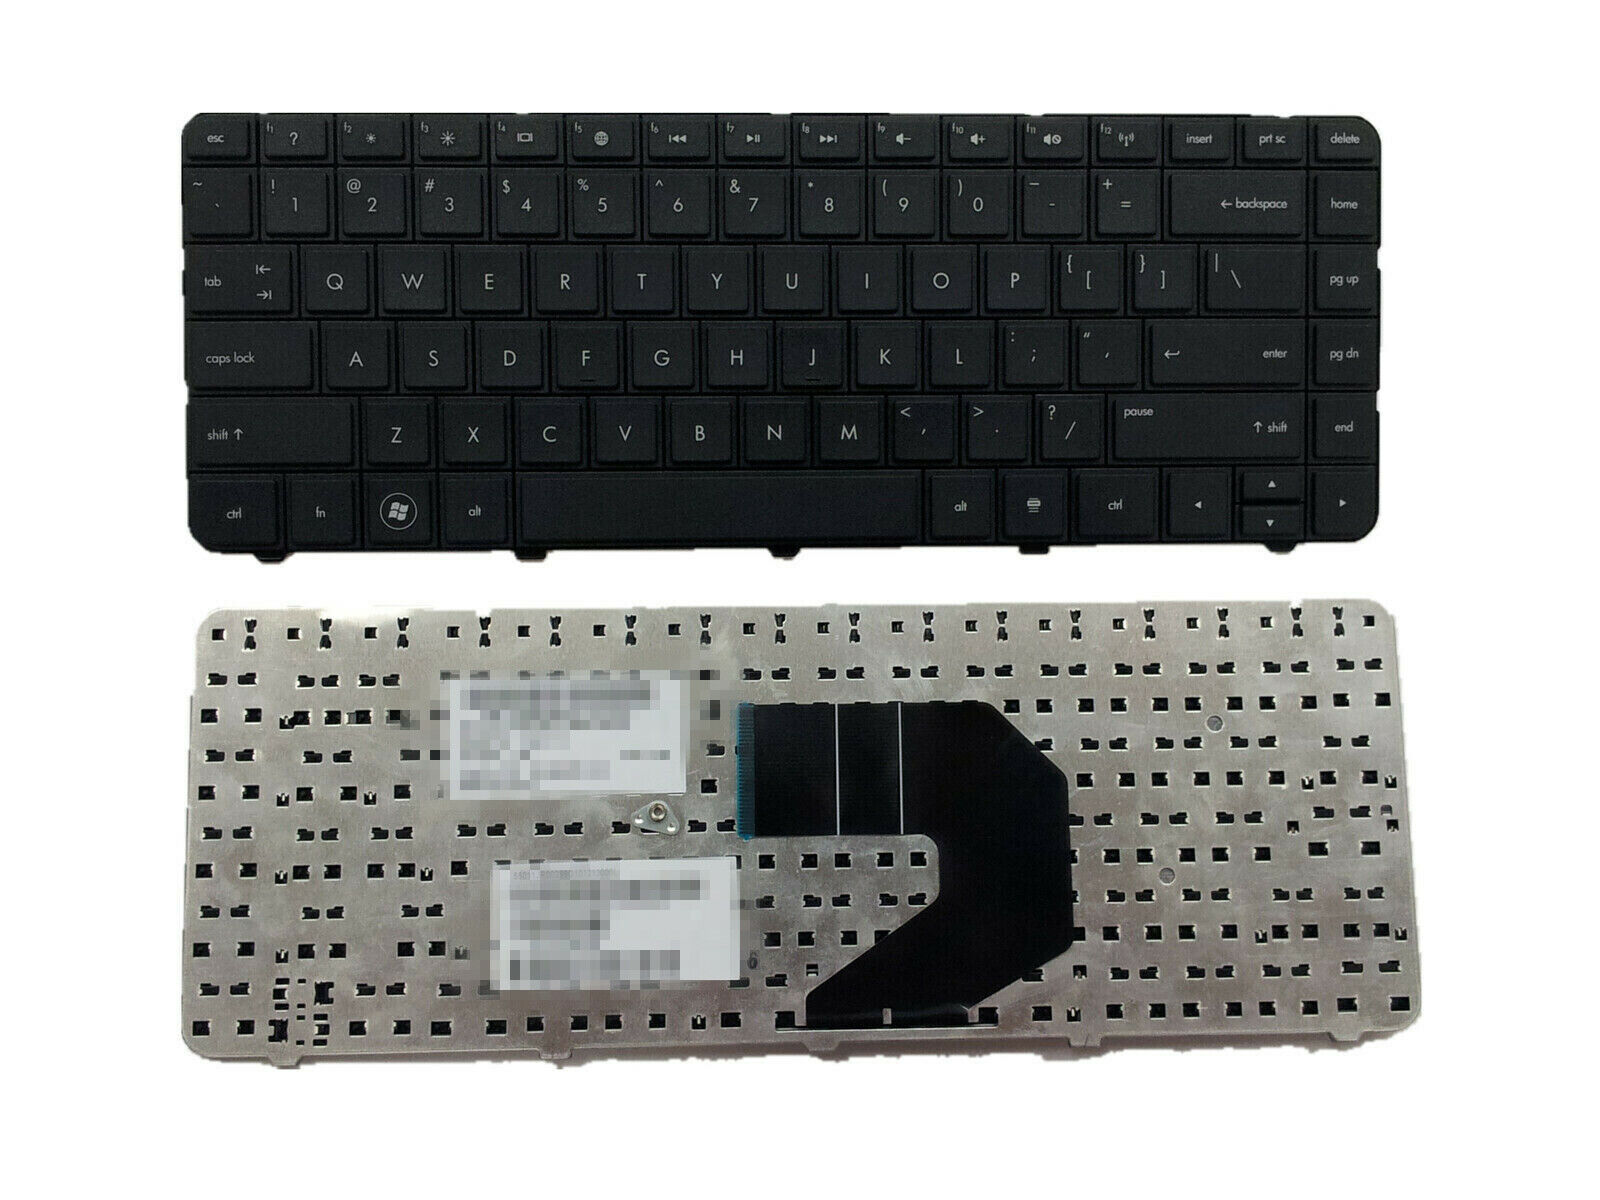 New HP Compaq Presario CQ43-100 CQ43-200 CQ43-300 CQ43-400 Series Keyboard